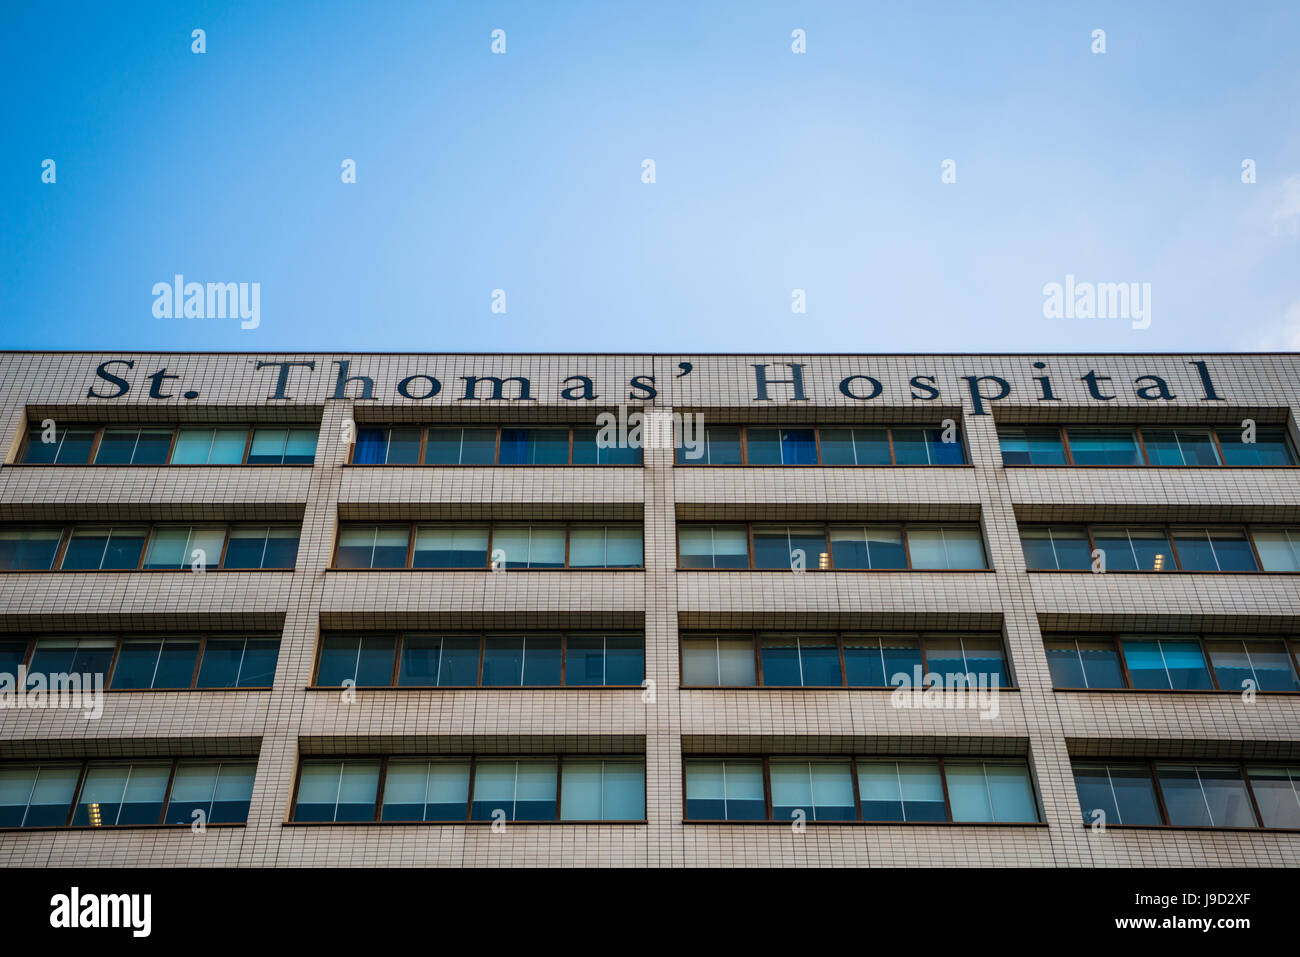 St. Thomas Hospital, Hospital, Facade, London, England, United Kingdom Stock Photo